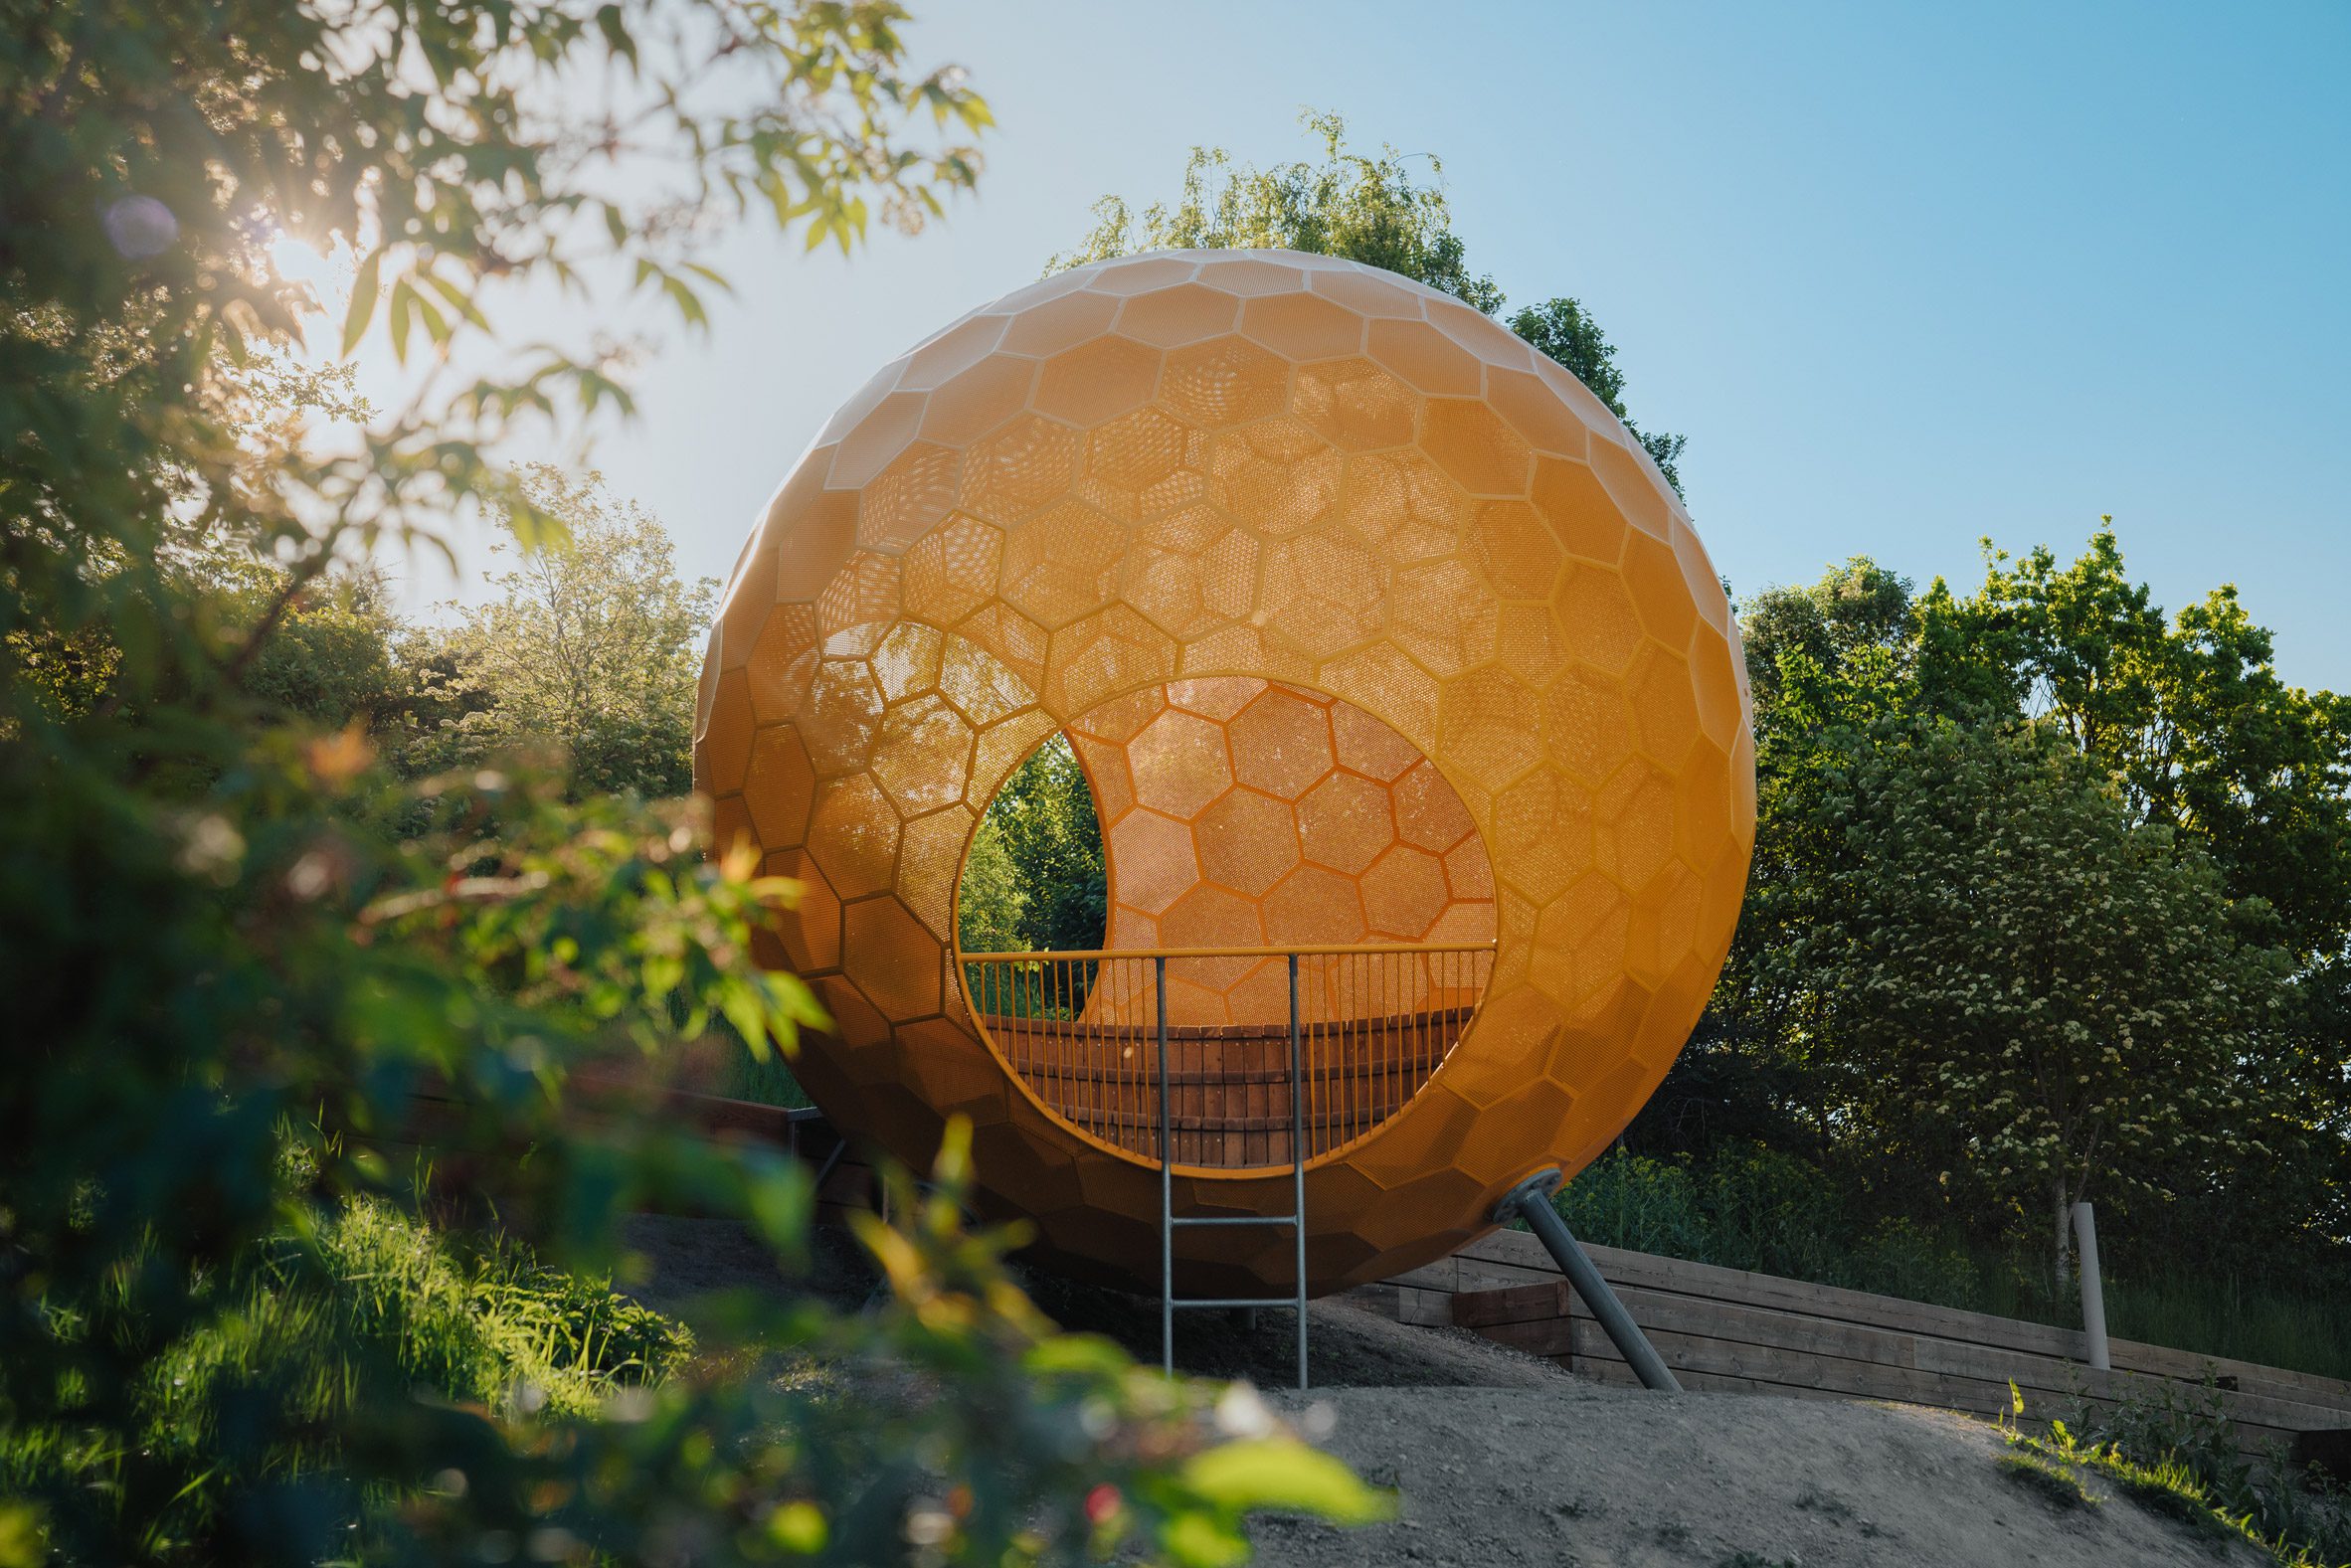 A hollow orange structure in Vårbergstoppen park